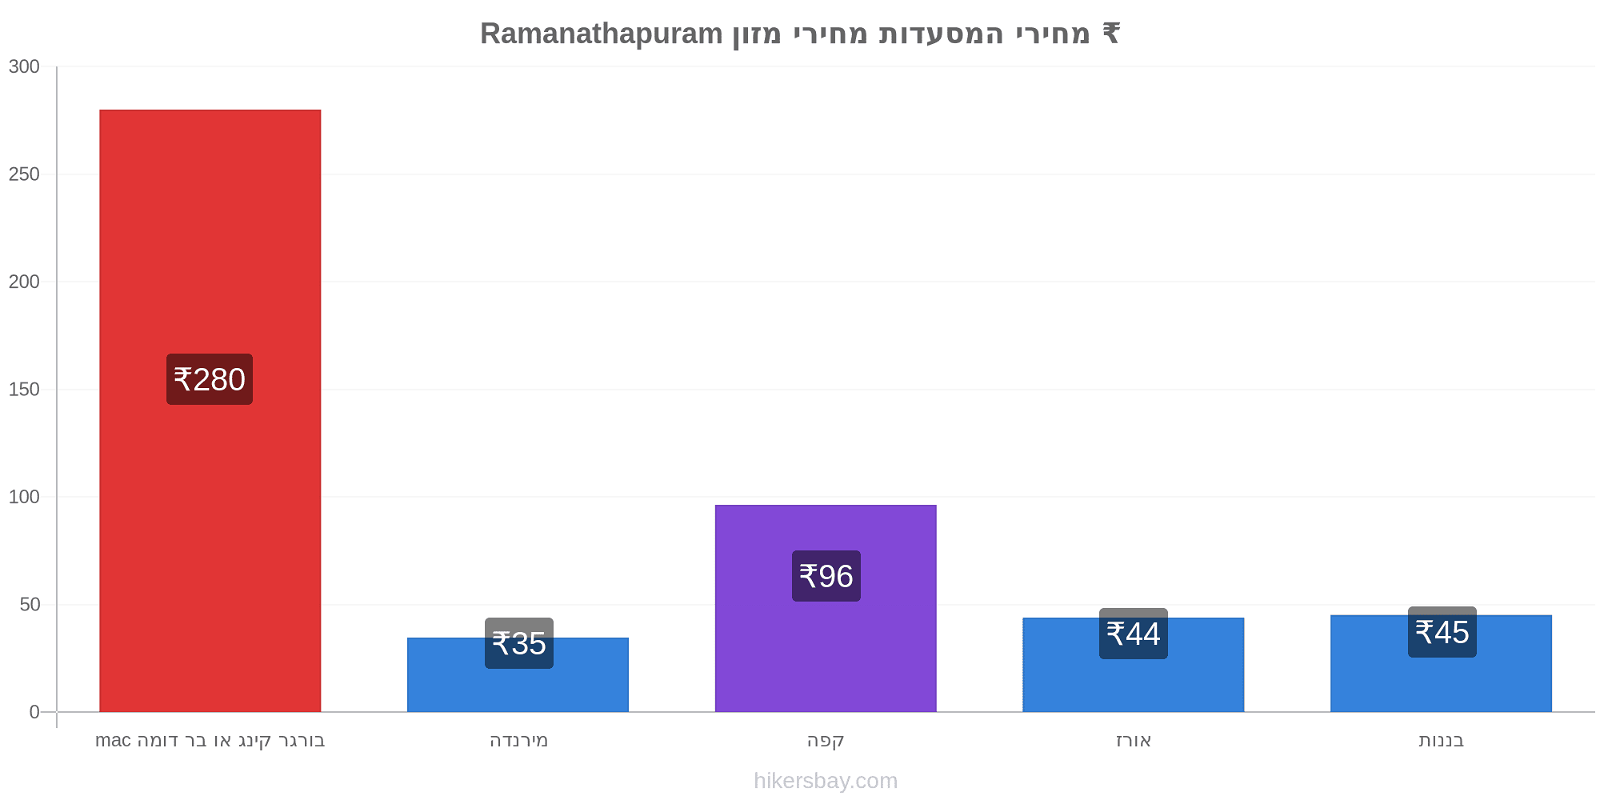 Ramanathapuram שינויי מחיר hikersbay.com